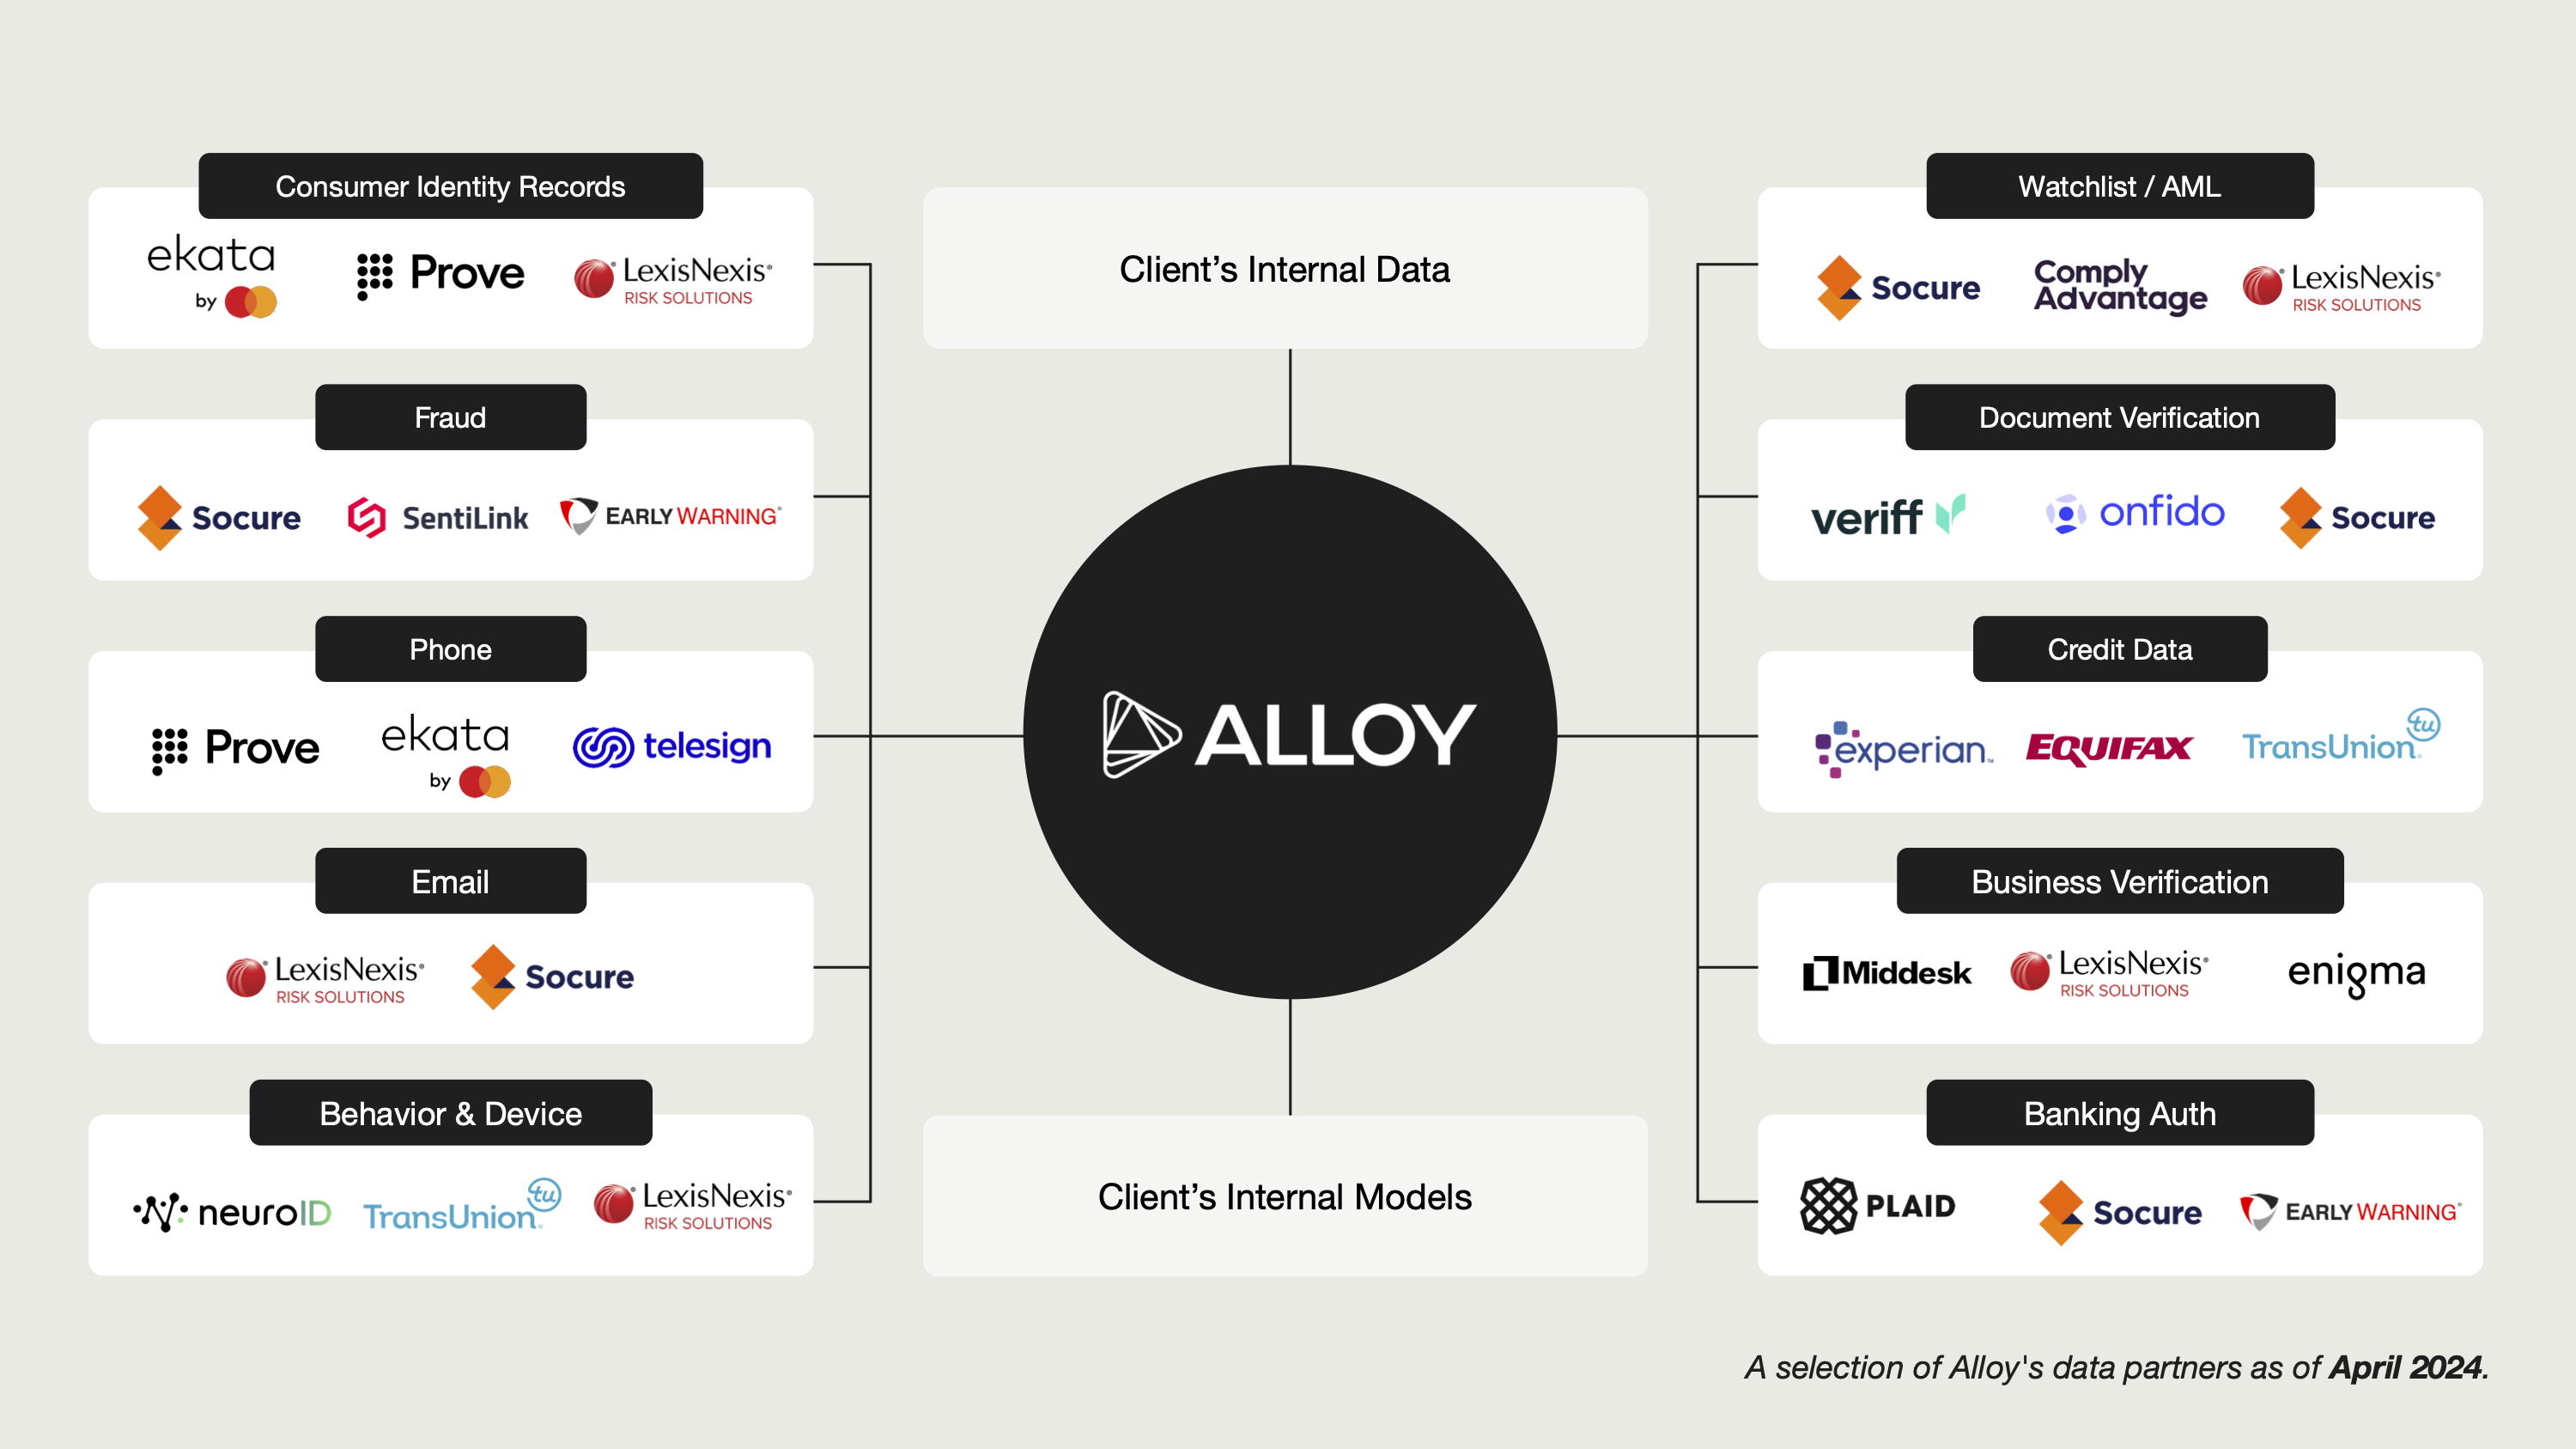 Alloy data partners